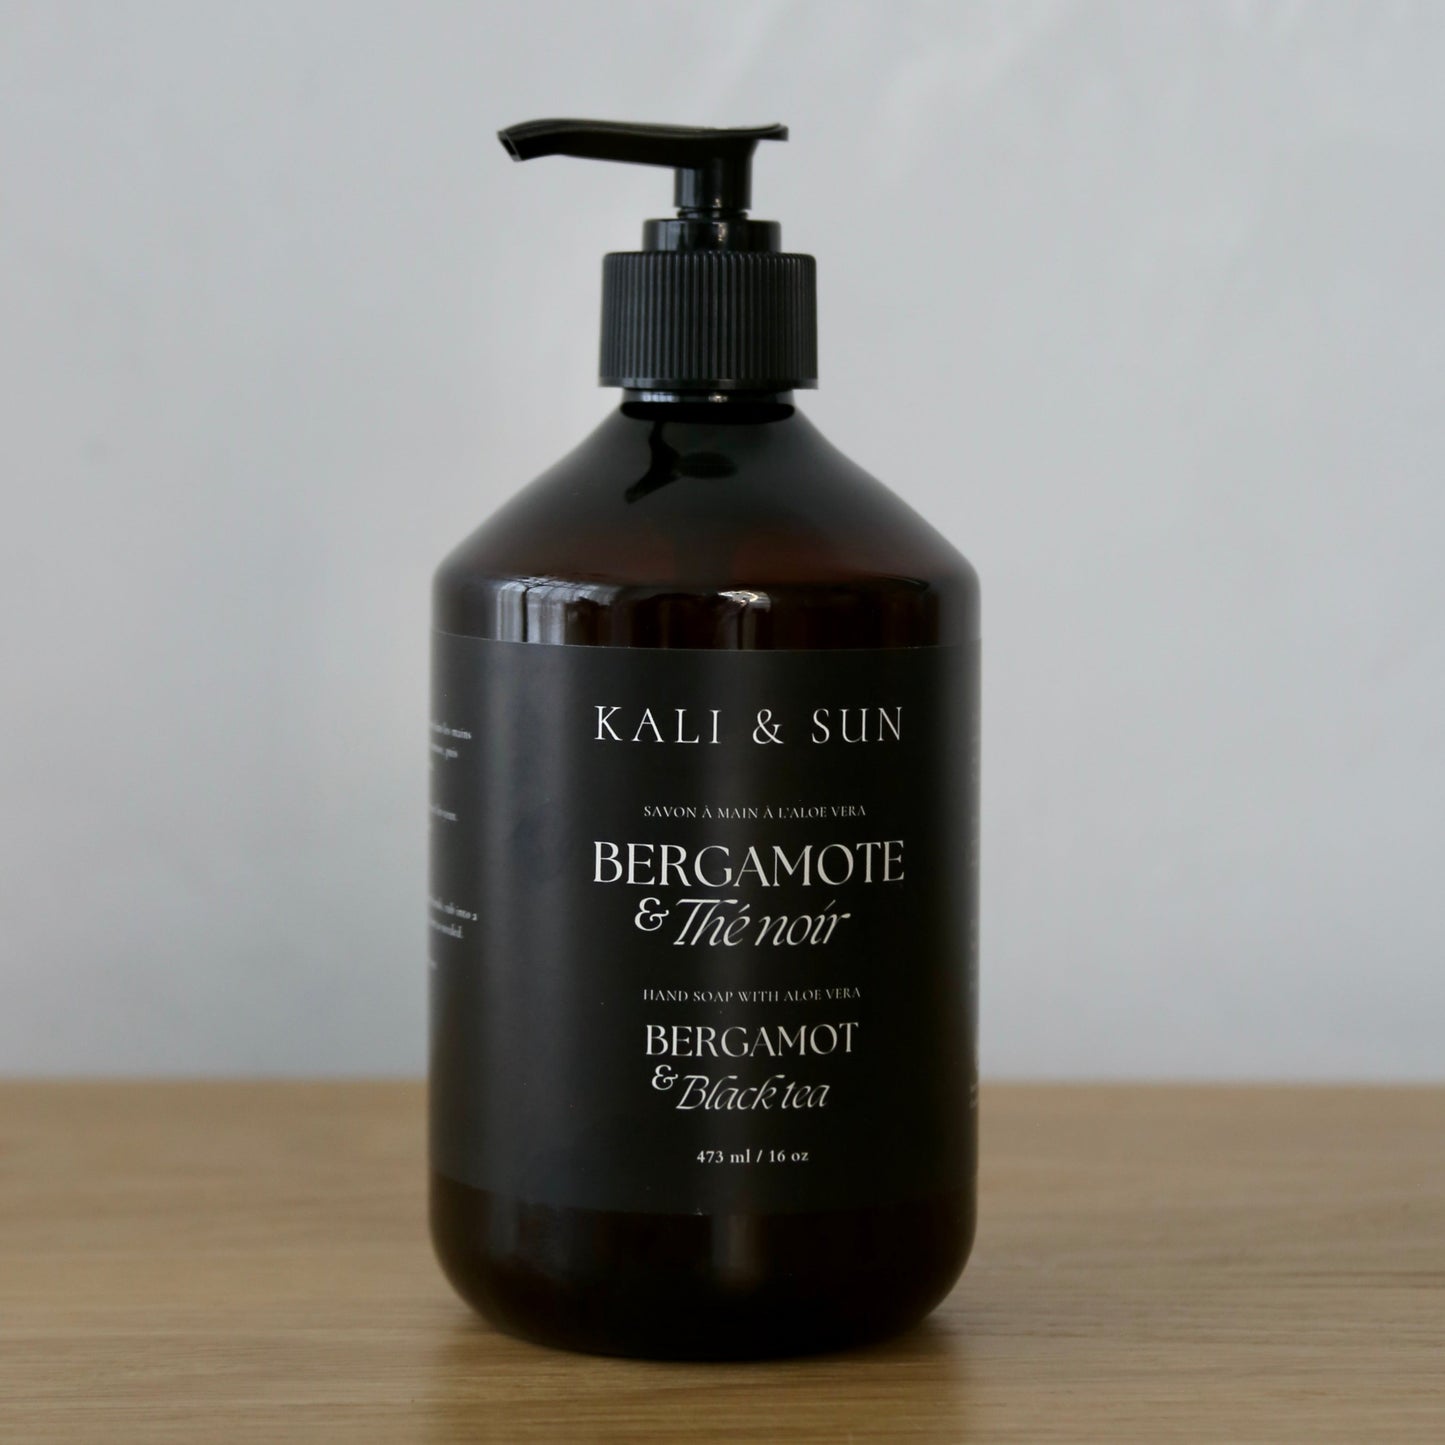 Bergamote & Black Tea Hand Soap with Aloe Vera